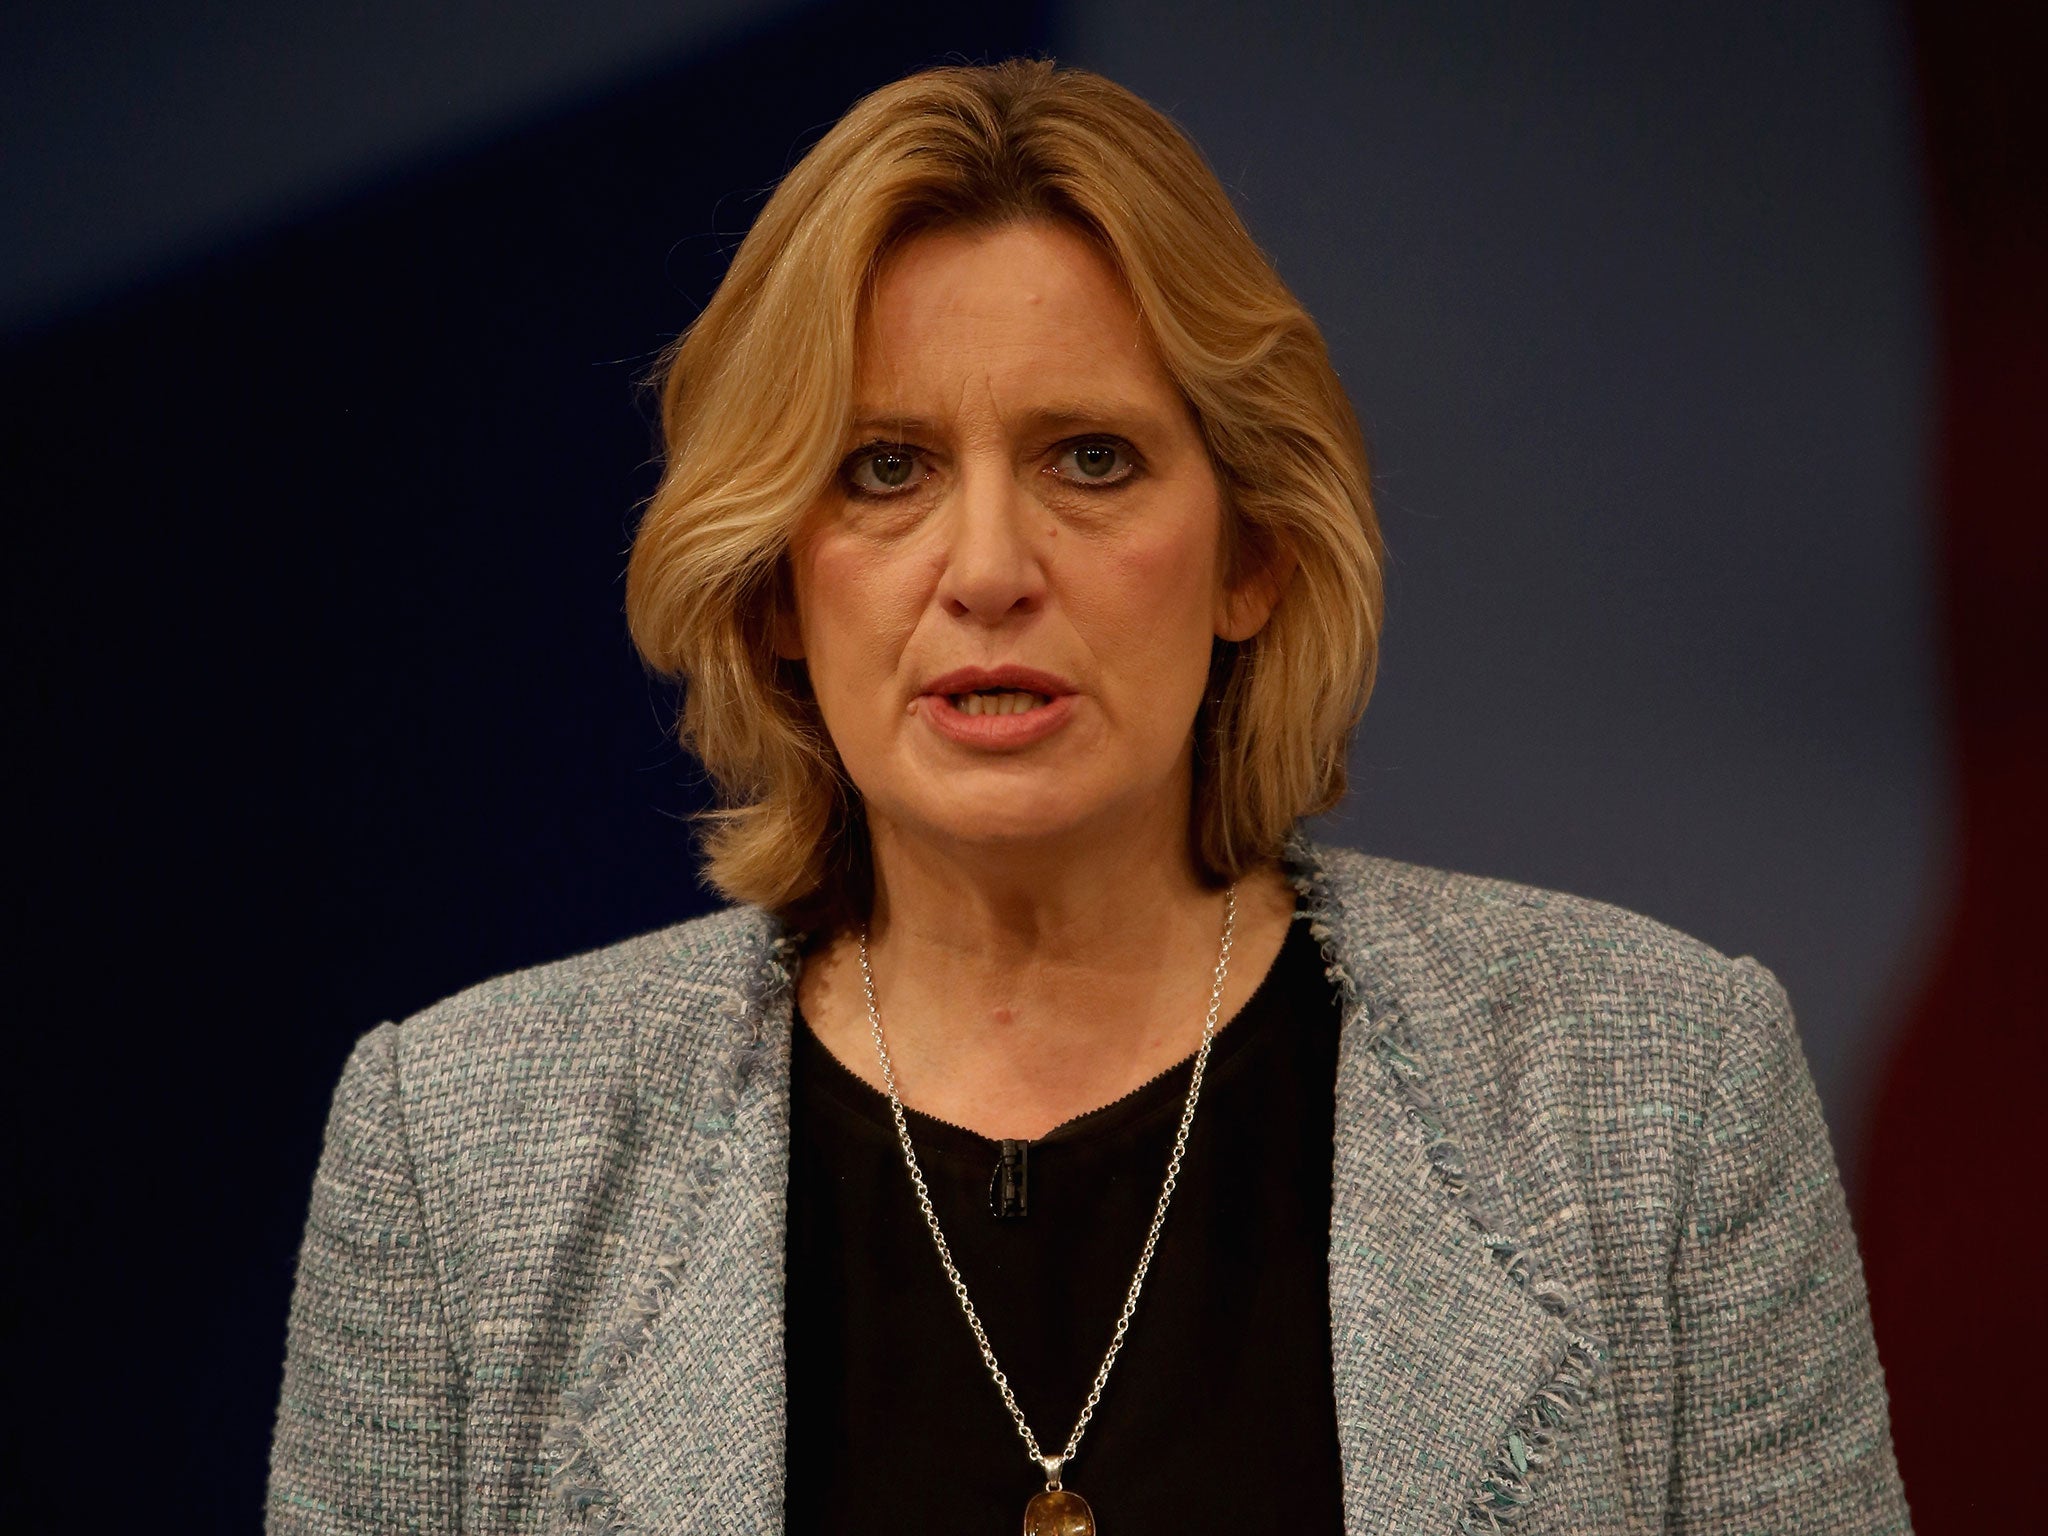 Energy secretary Amber Rudd is asking Ofgem regulators to investigate Age UK